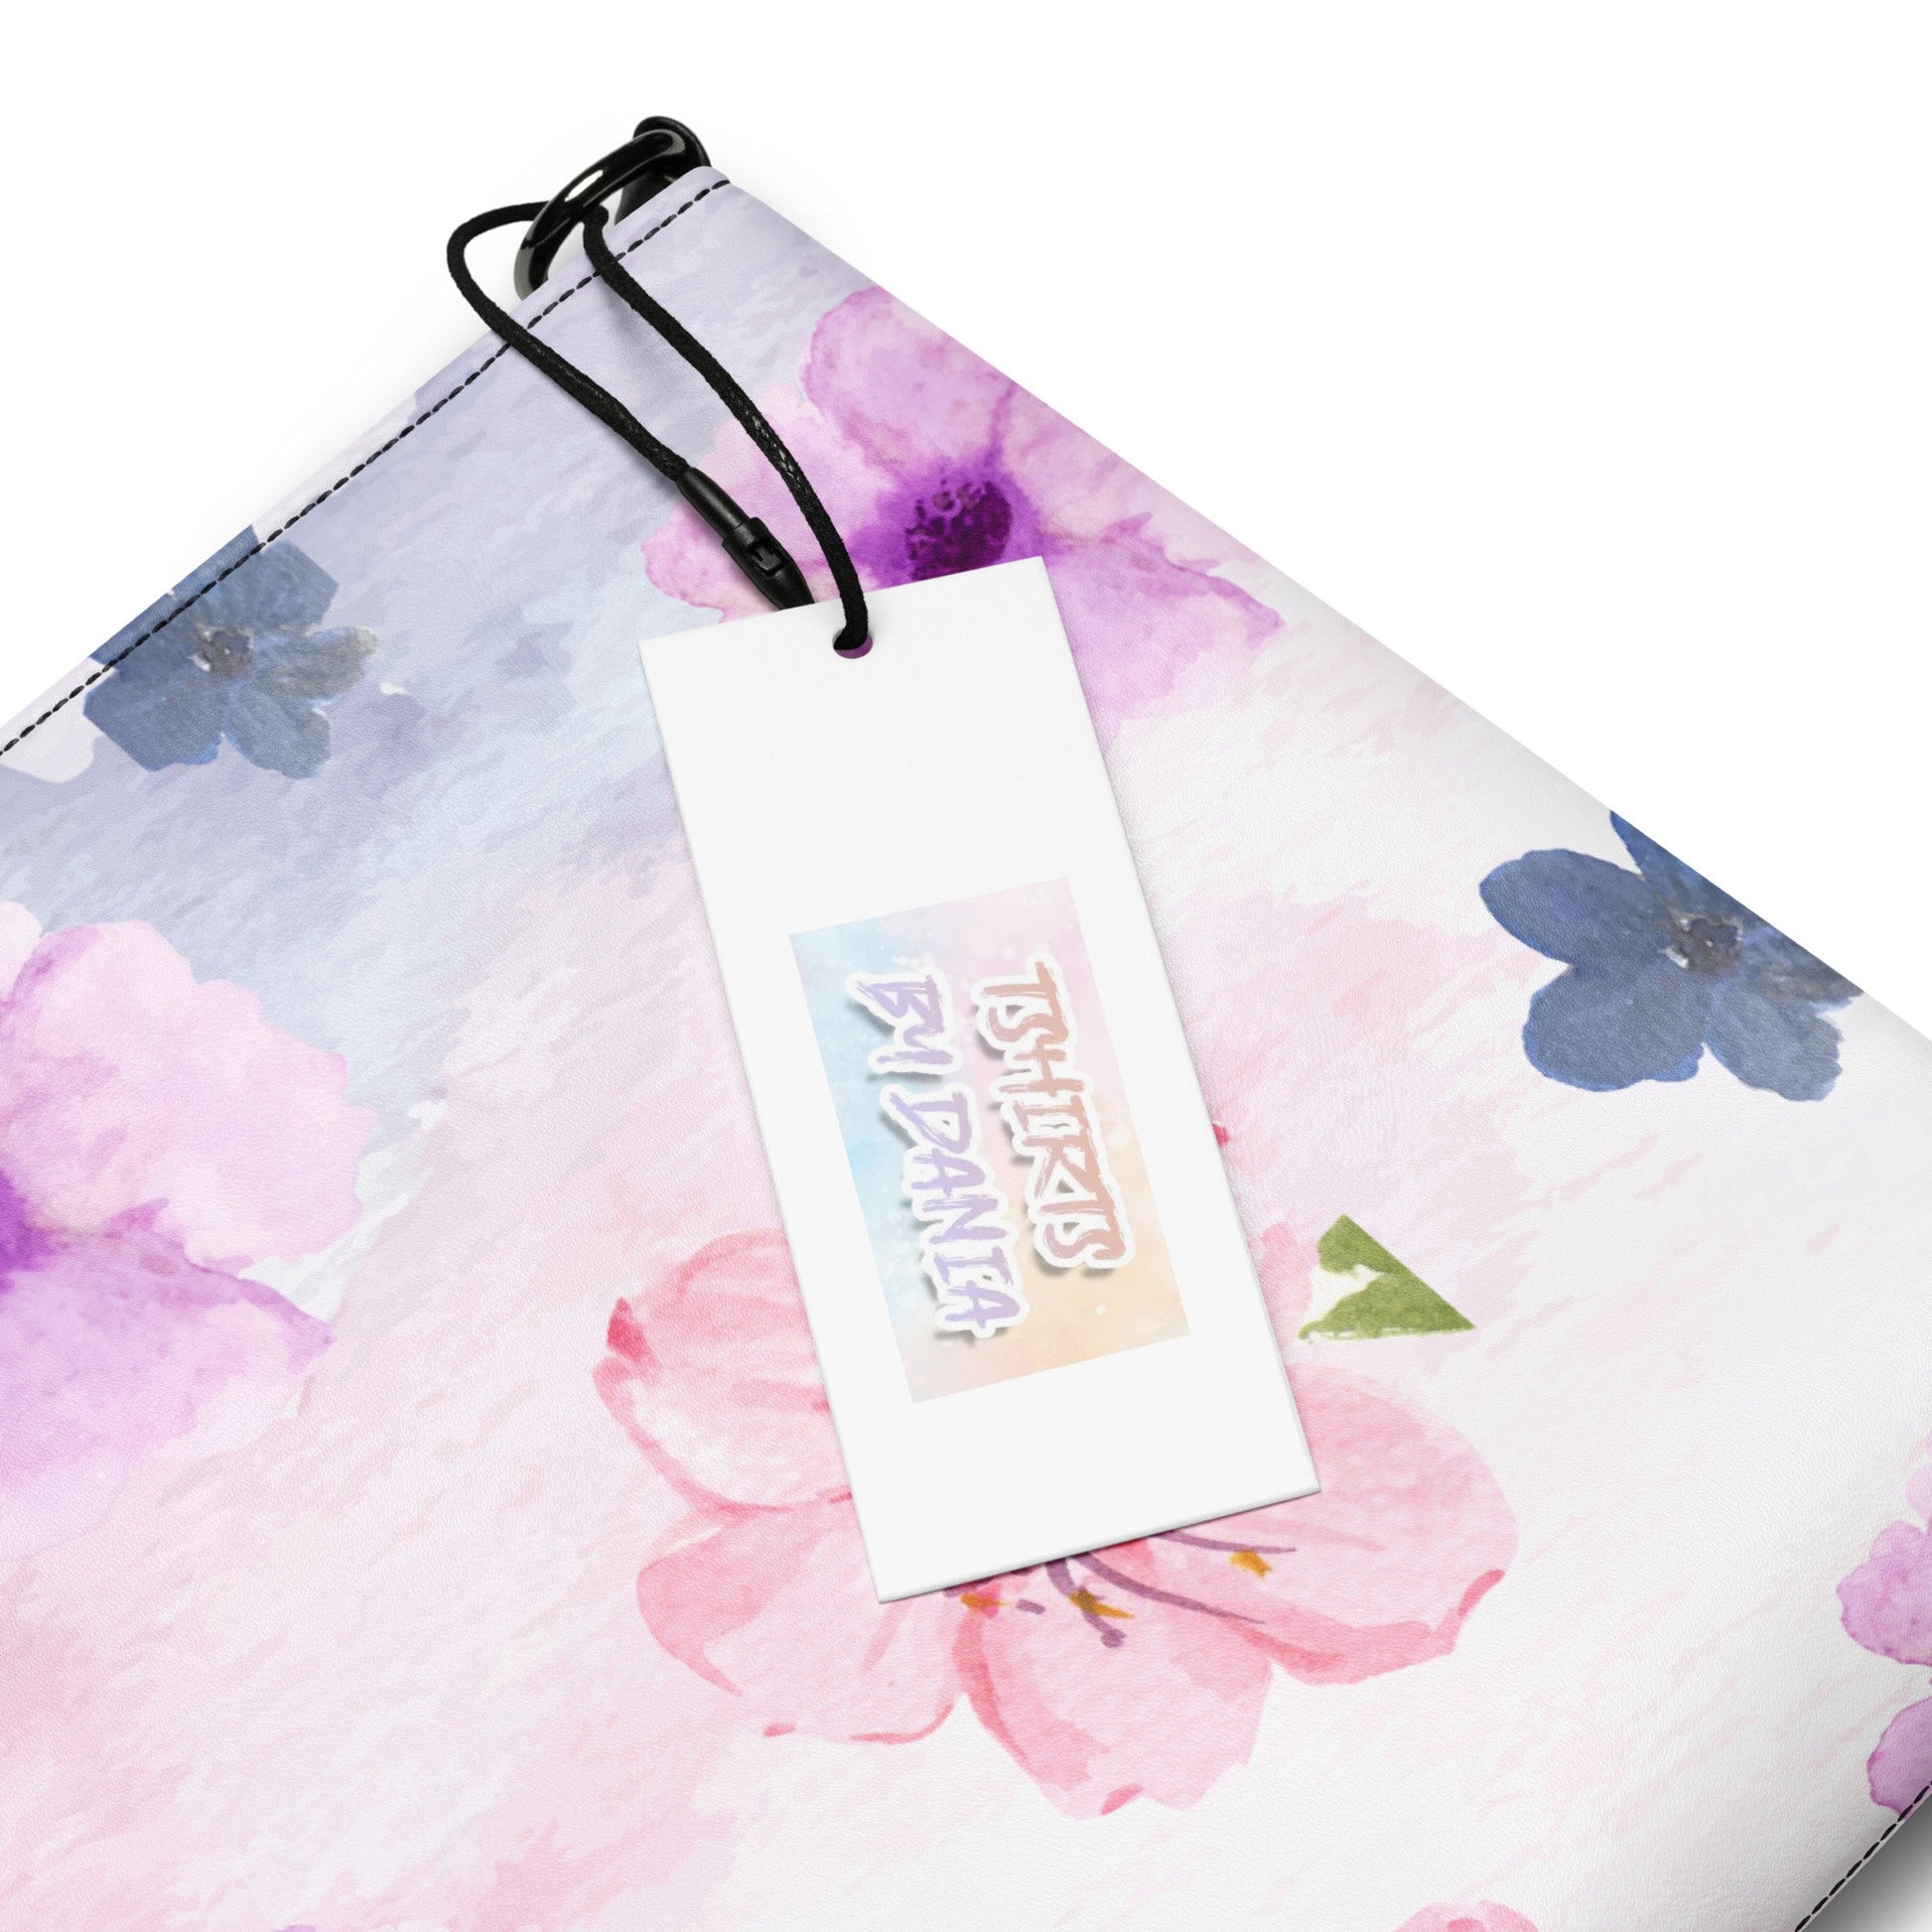 Wtercolor Pink Floral Crossbody bag